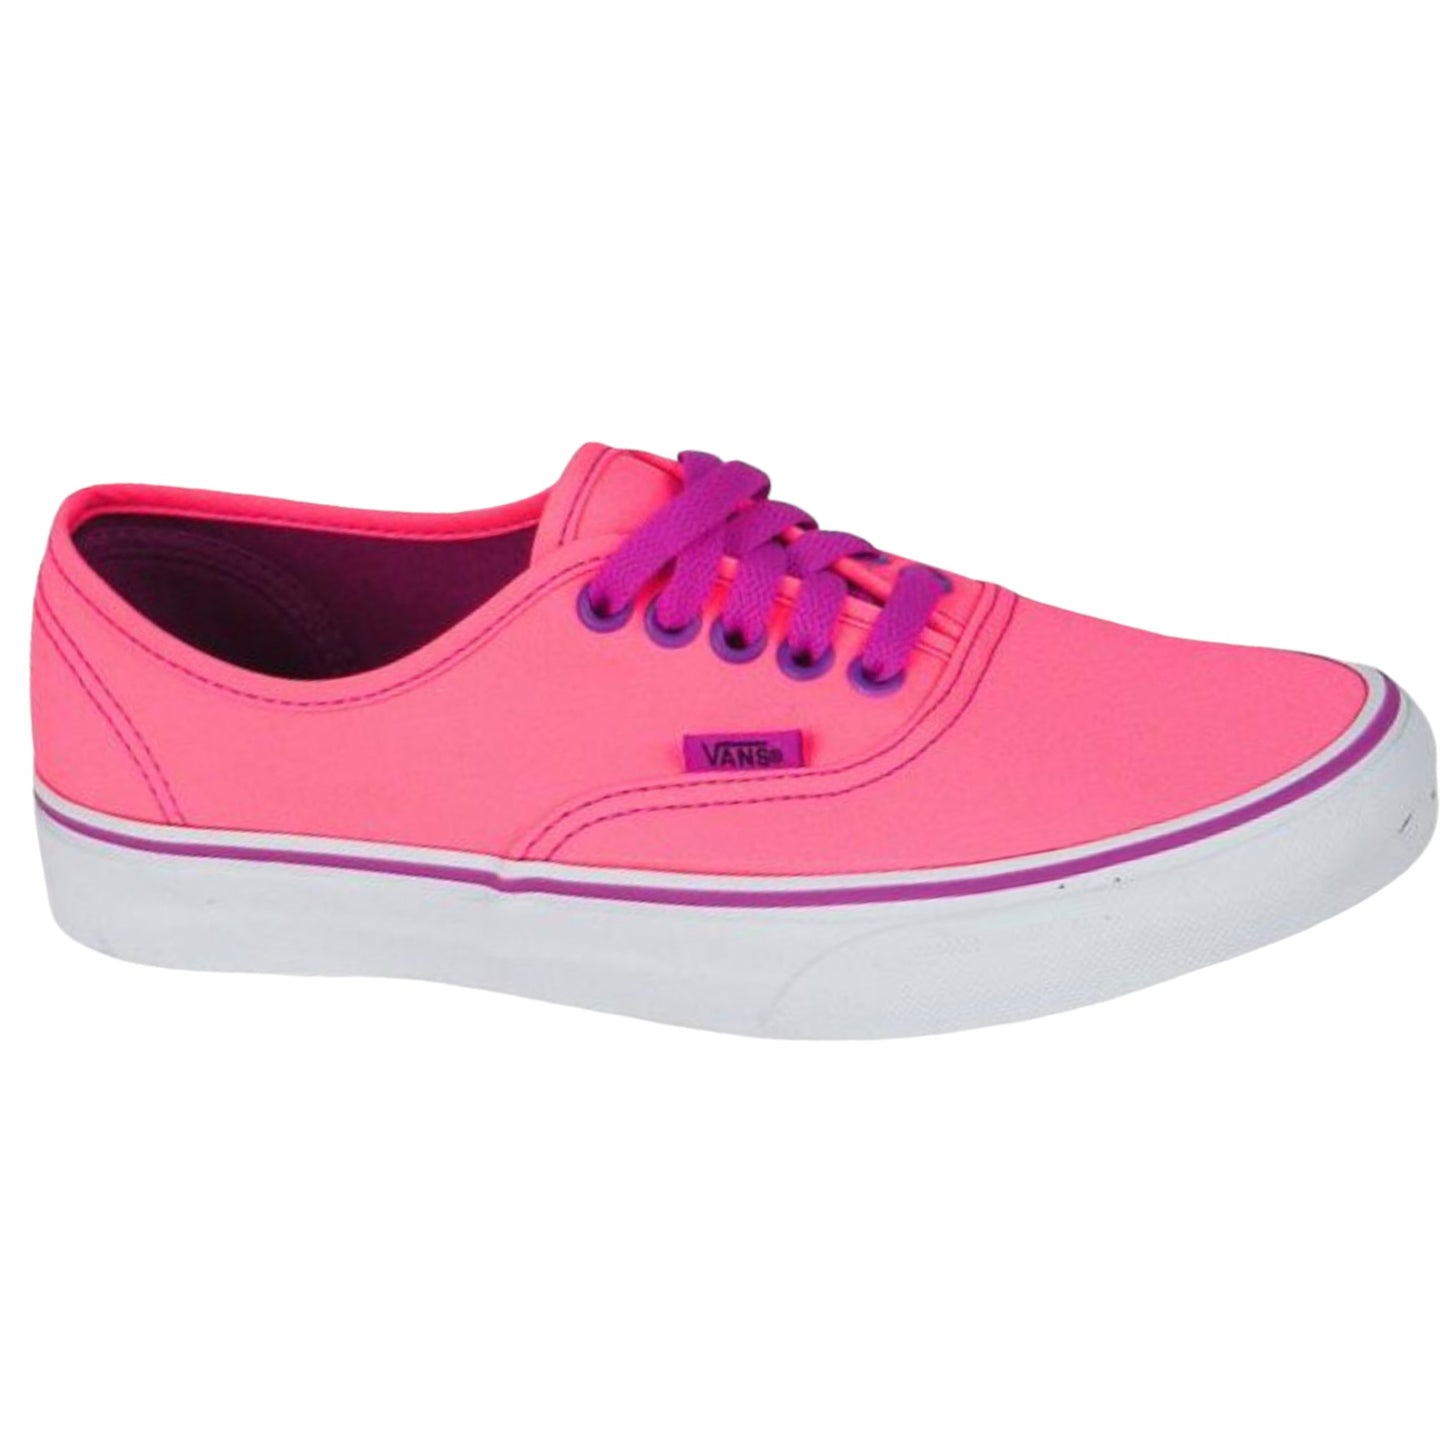 - Vans Youth Authentic Neon Pink/Purple - (VN 0RQZ8PV) - PP - R1L1 - L/P